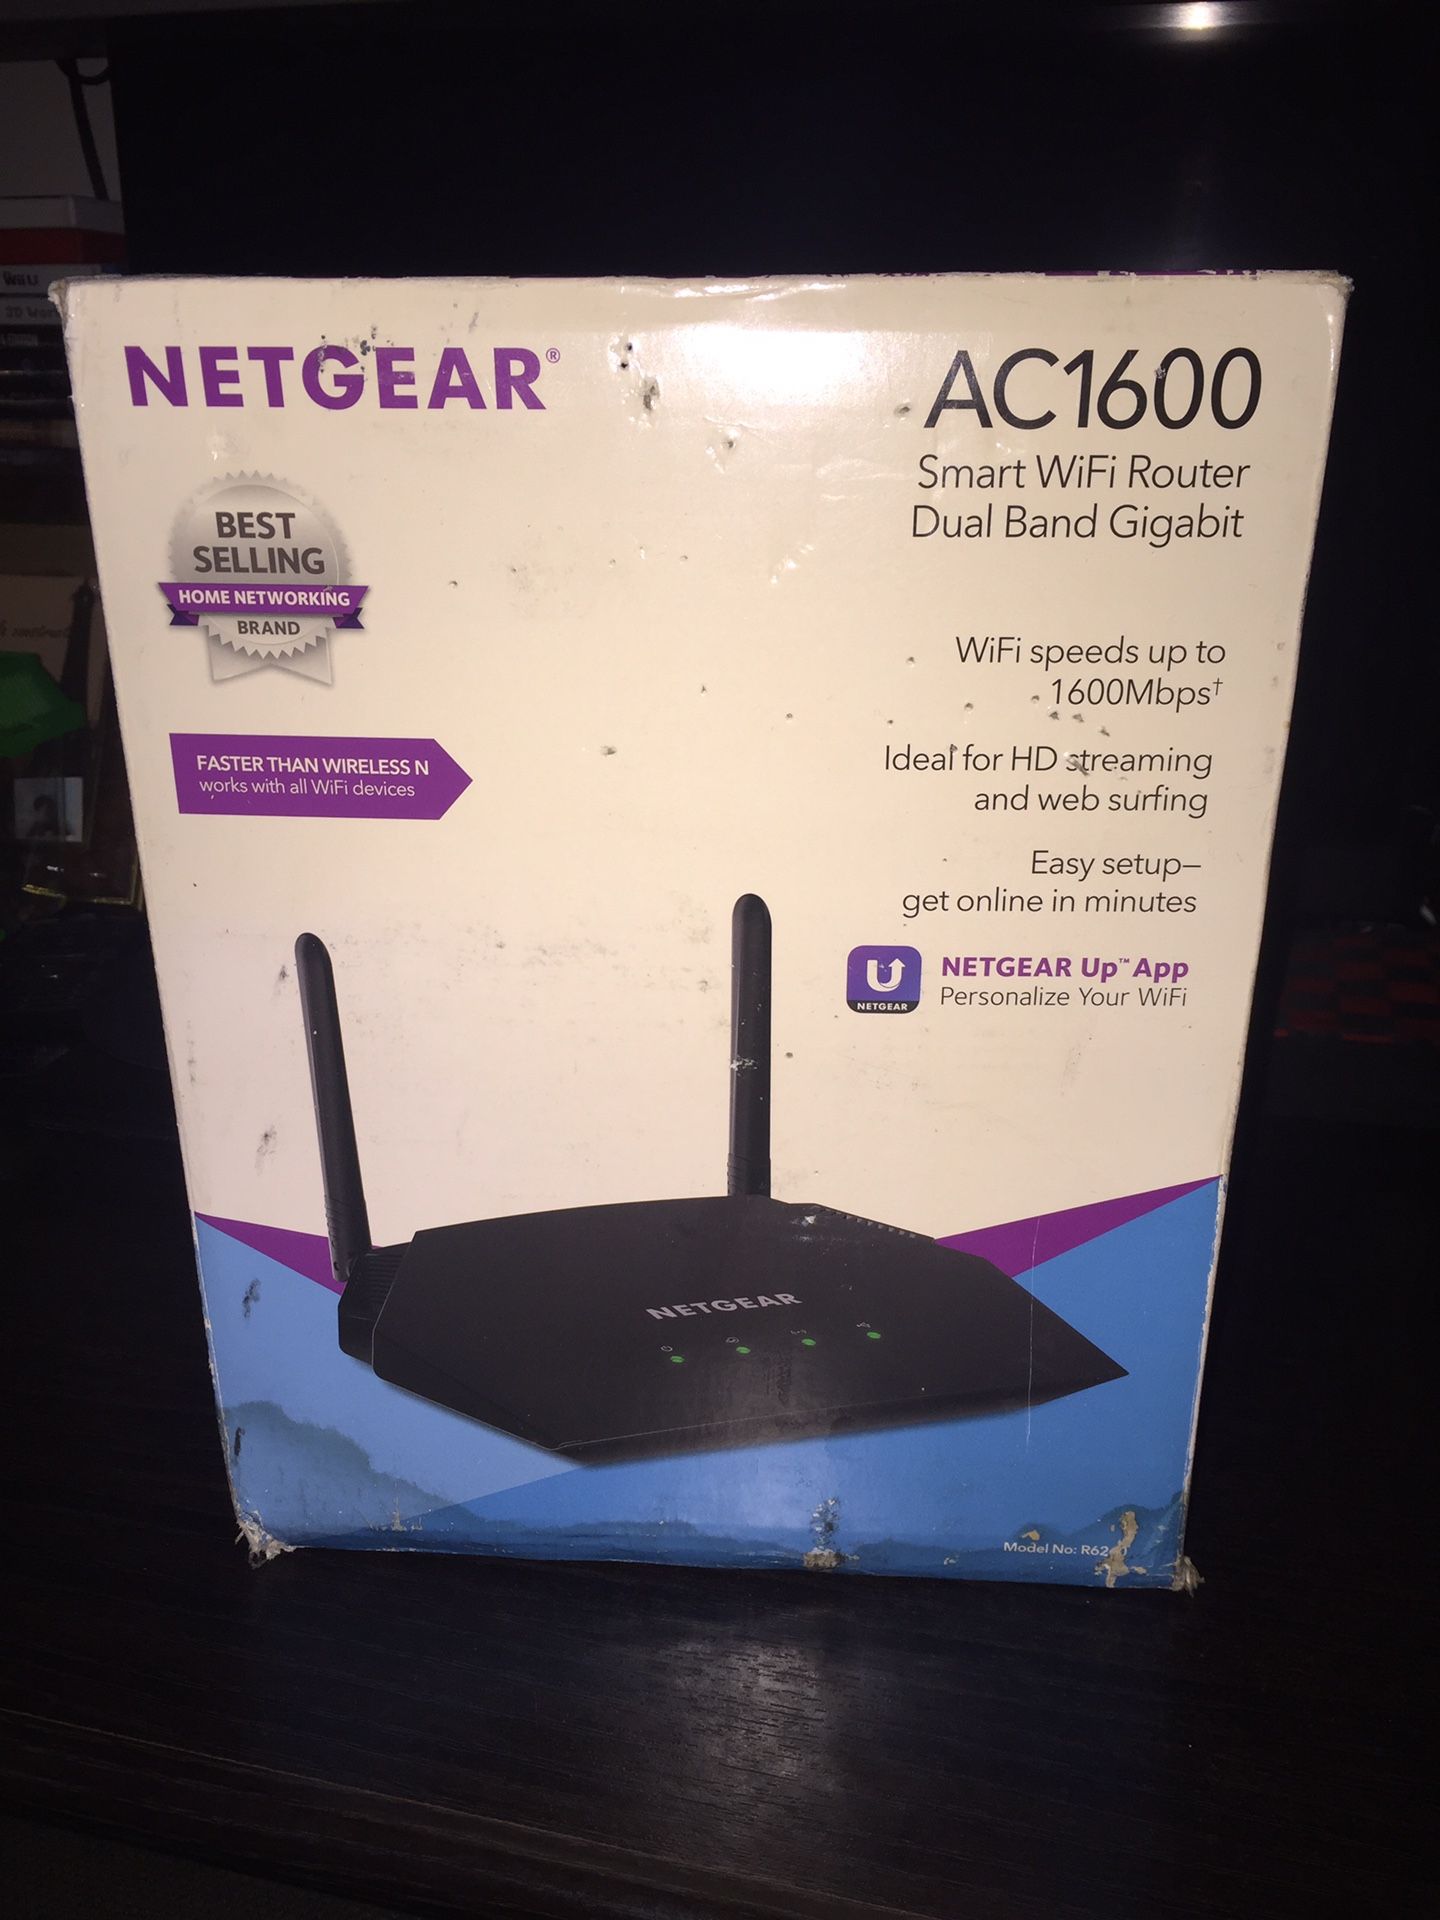 NETGEAR AC1600 Smart WiFi Router - Dual Band Gigabit